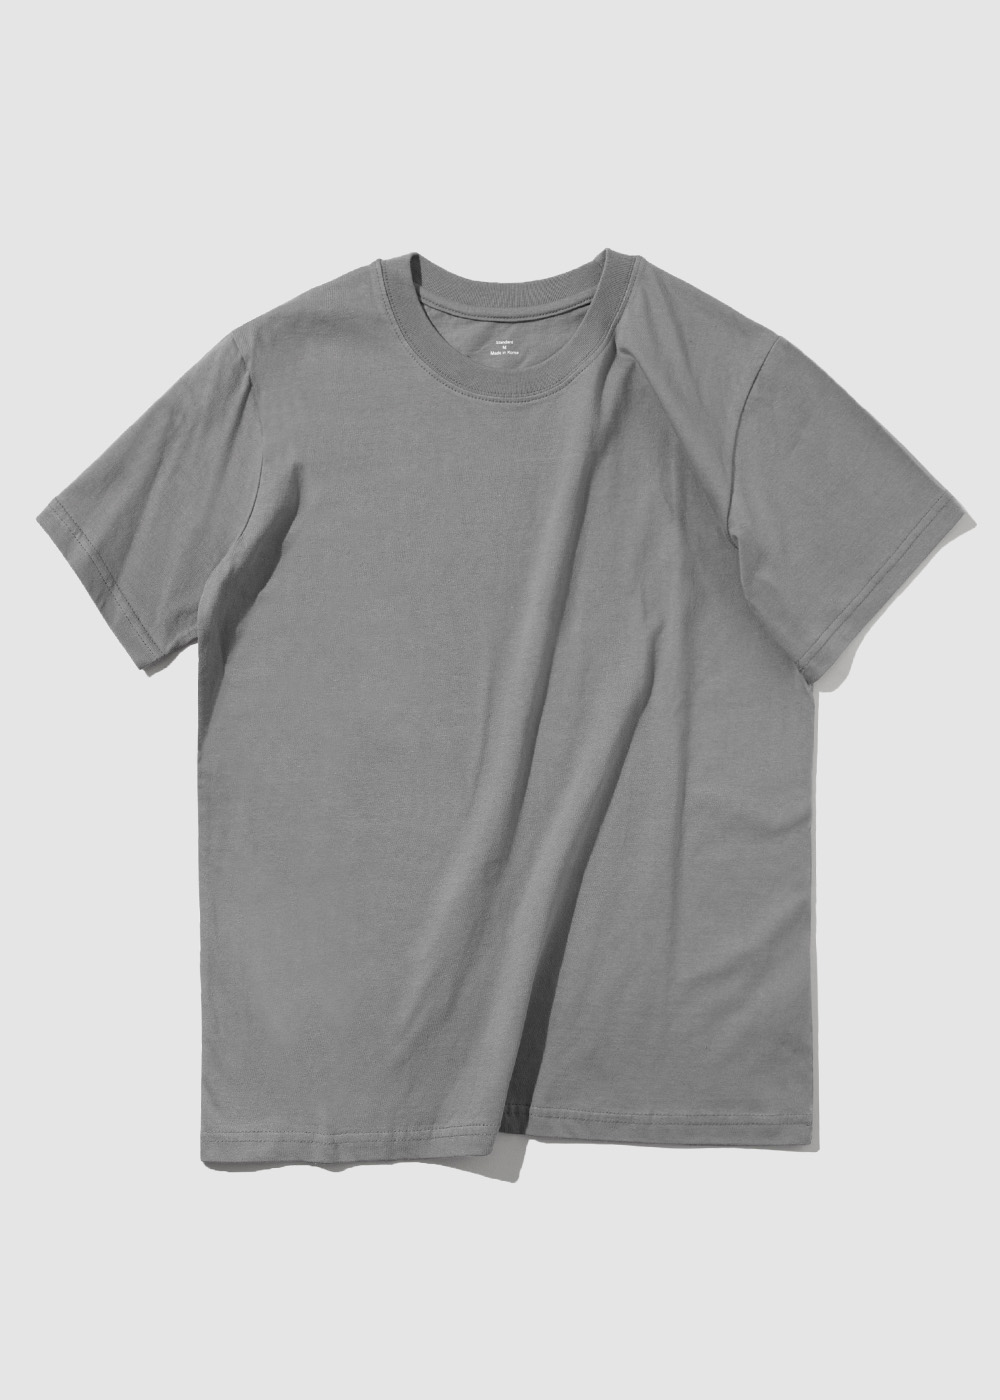 D. Tumbled Carded Cotton 100% 20/1 Single T-shirt _ shark skin